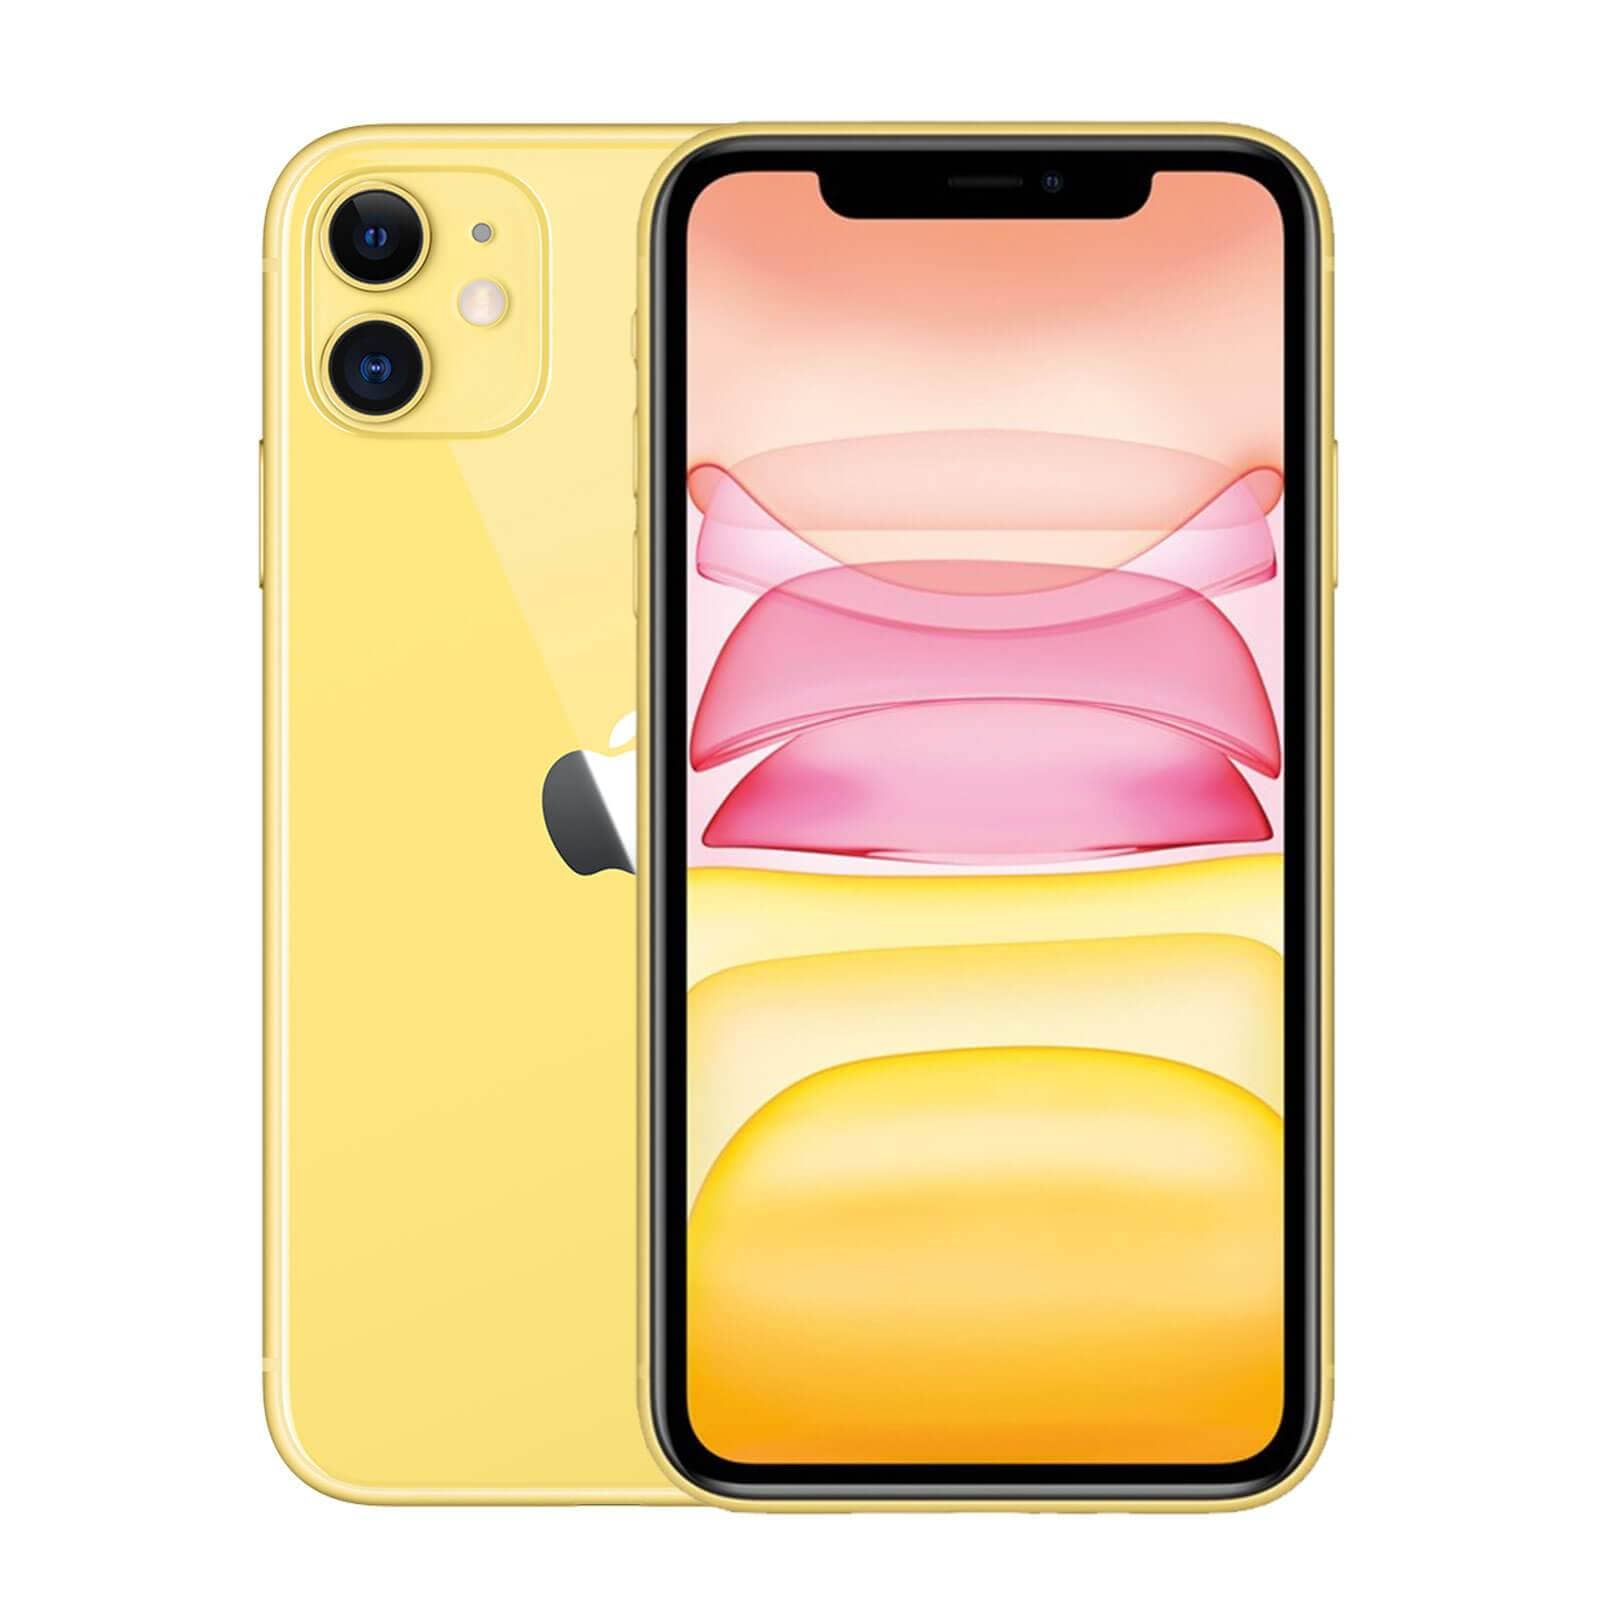 Apple iPhone 11 64GB Yellow Very Good - Unlocked 64GB Yellow Very Good